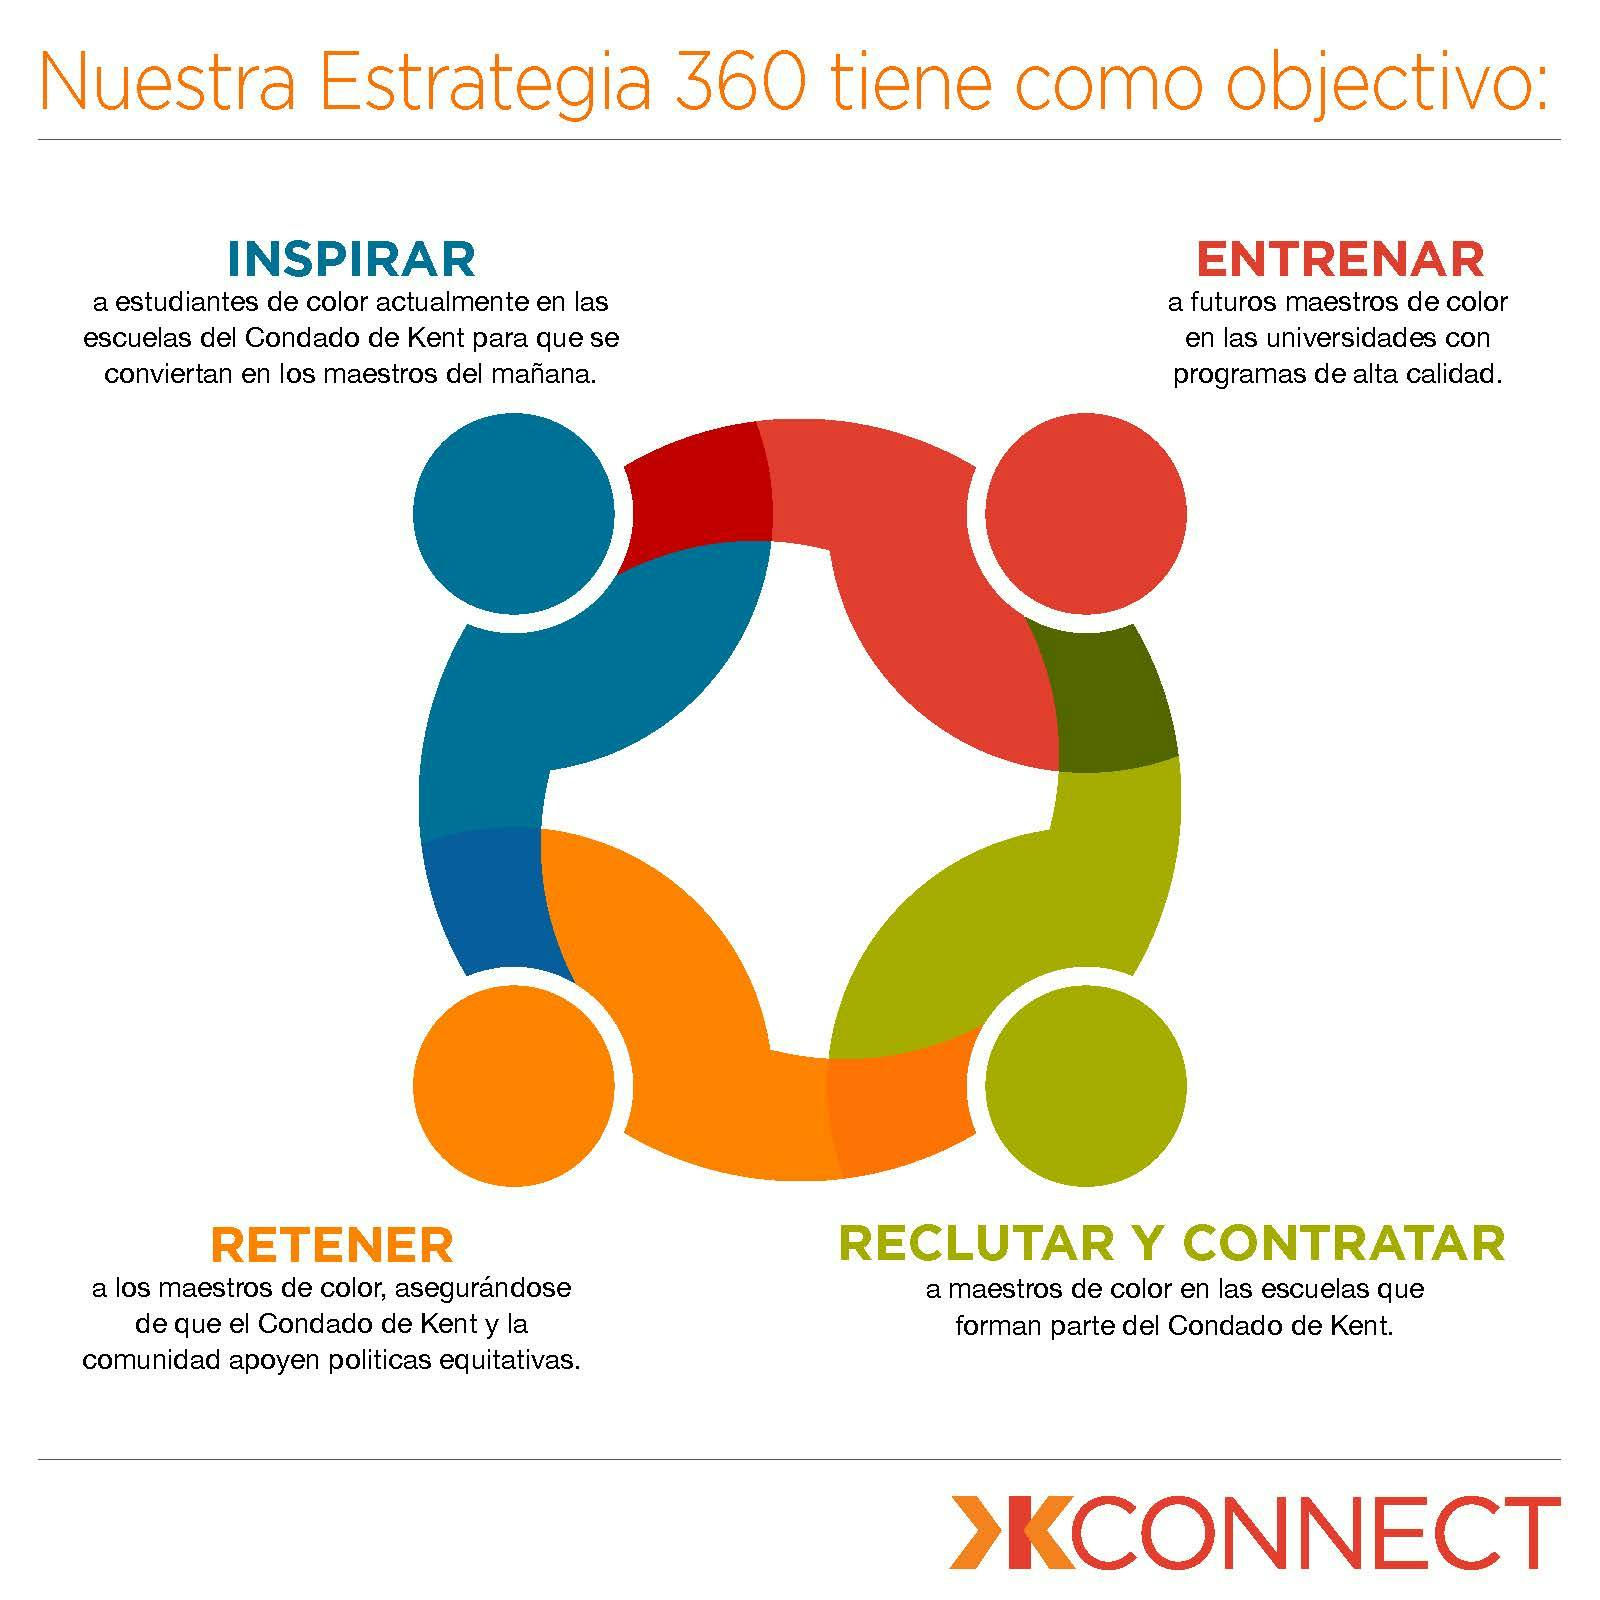 KCON-IMG-1122-360 Strategy Graphic SPANISH.jpg